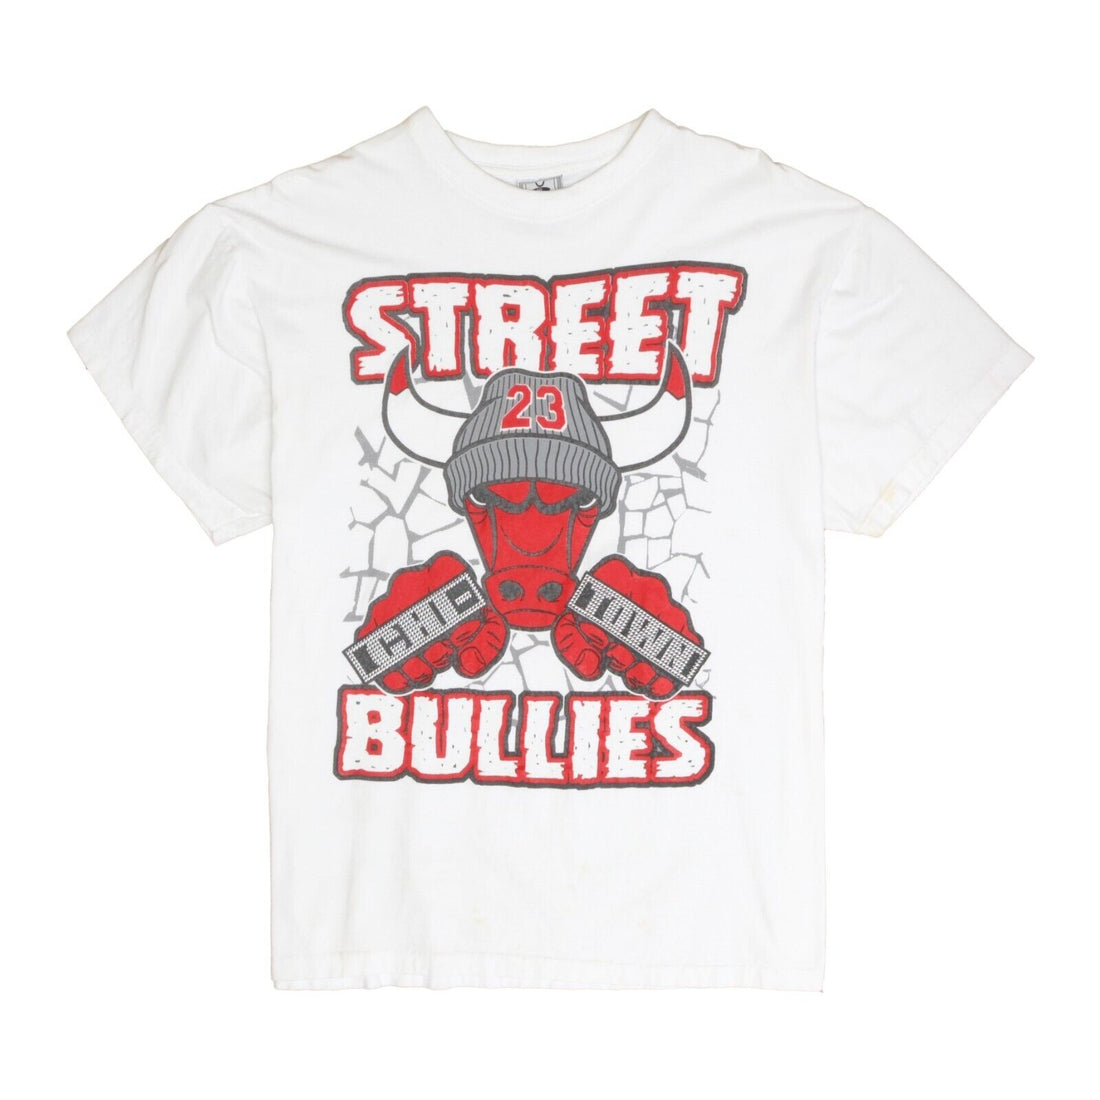 Vintage Chicago Bulls Street Bullies T-Shirt Size XL 90s NBA